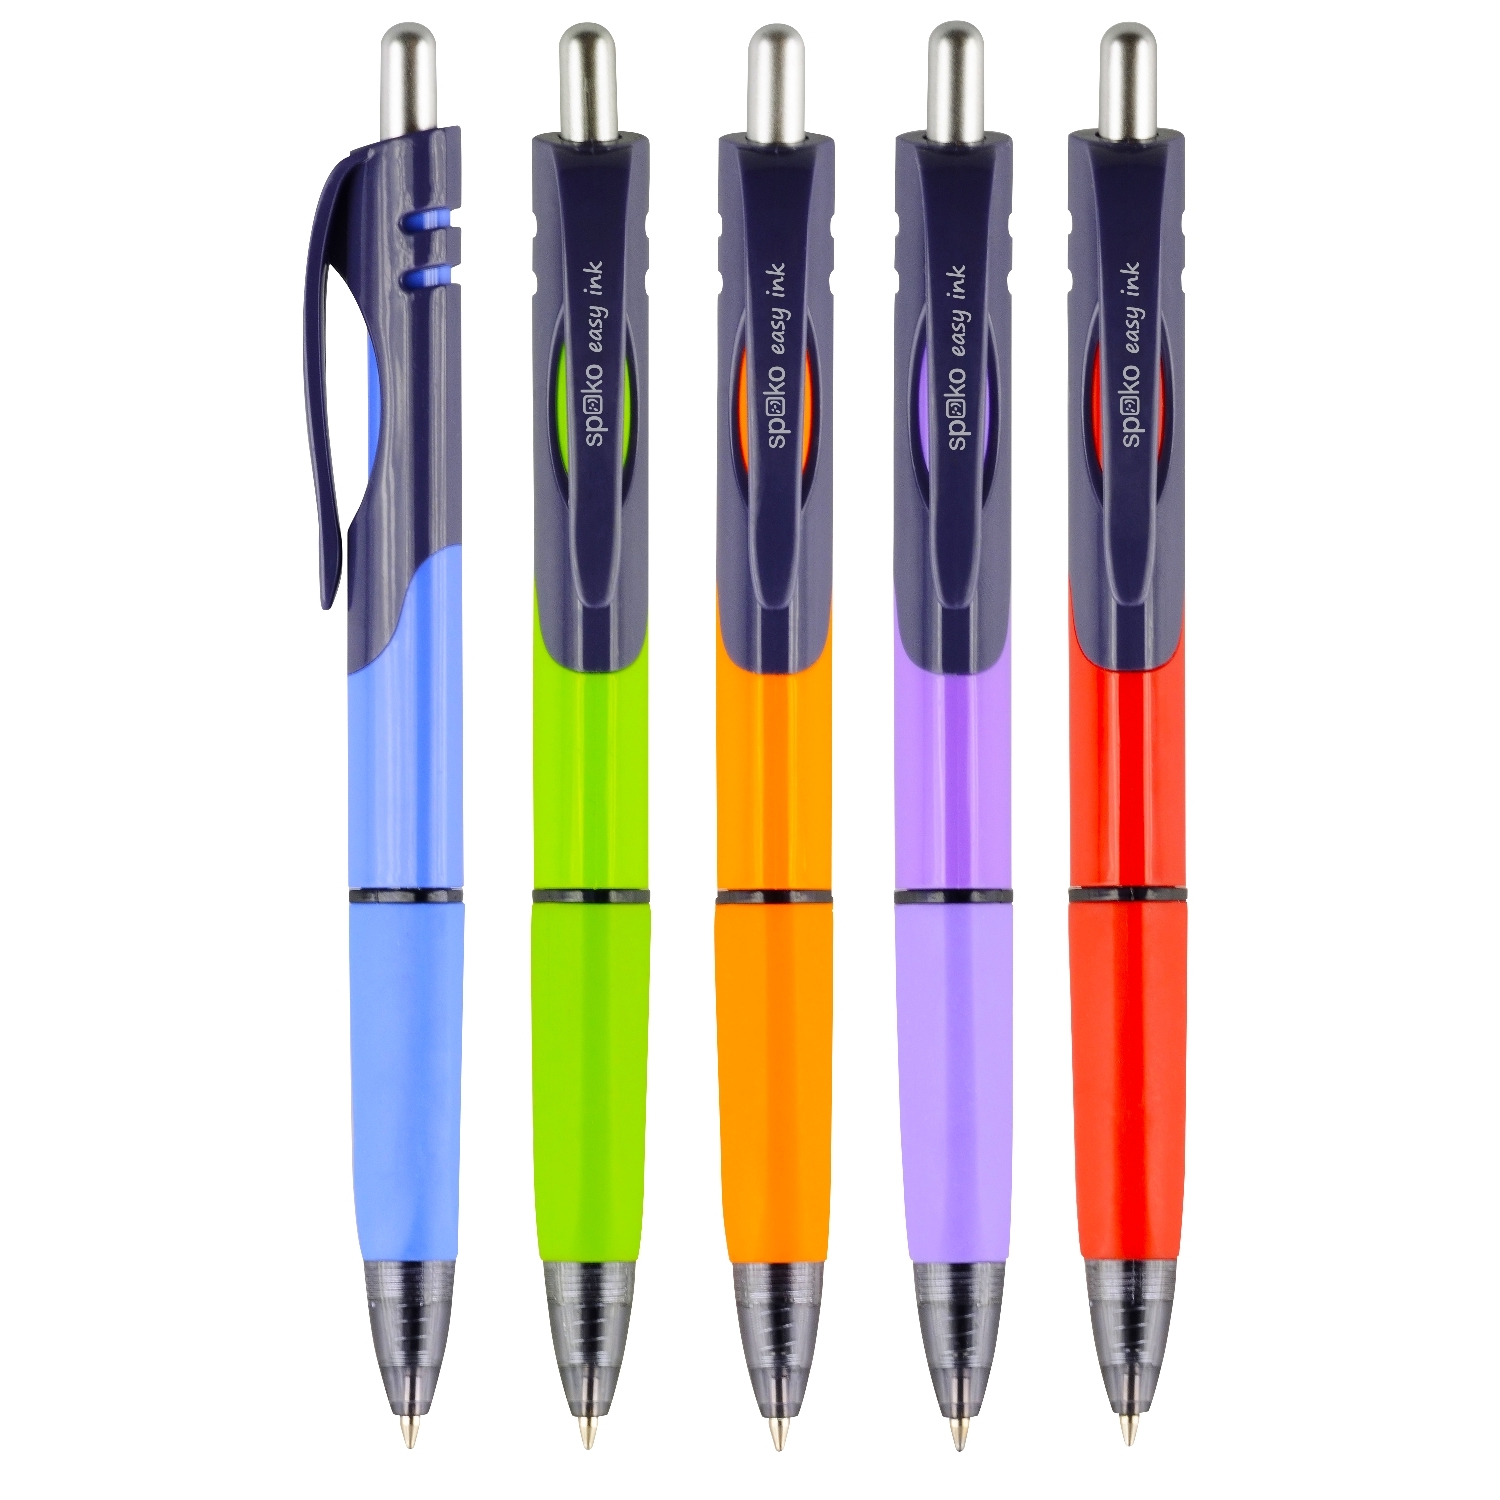 Kuličkové pero Spoko Triangle, Easy Ink, modrá náplň, mix barev, krabička